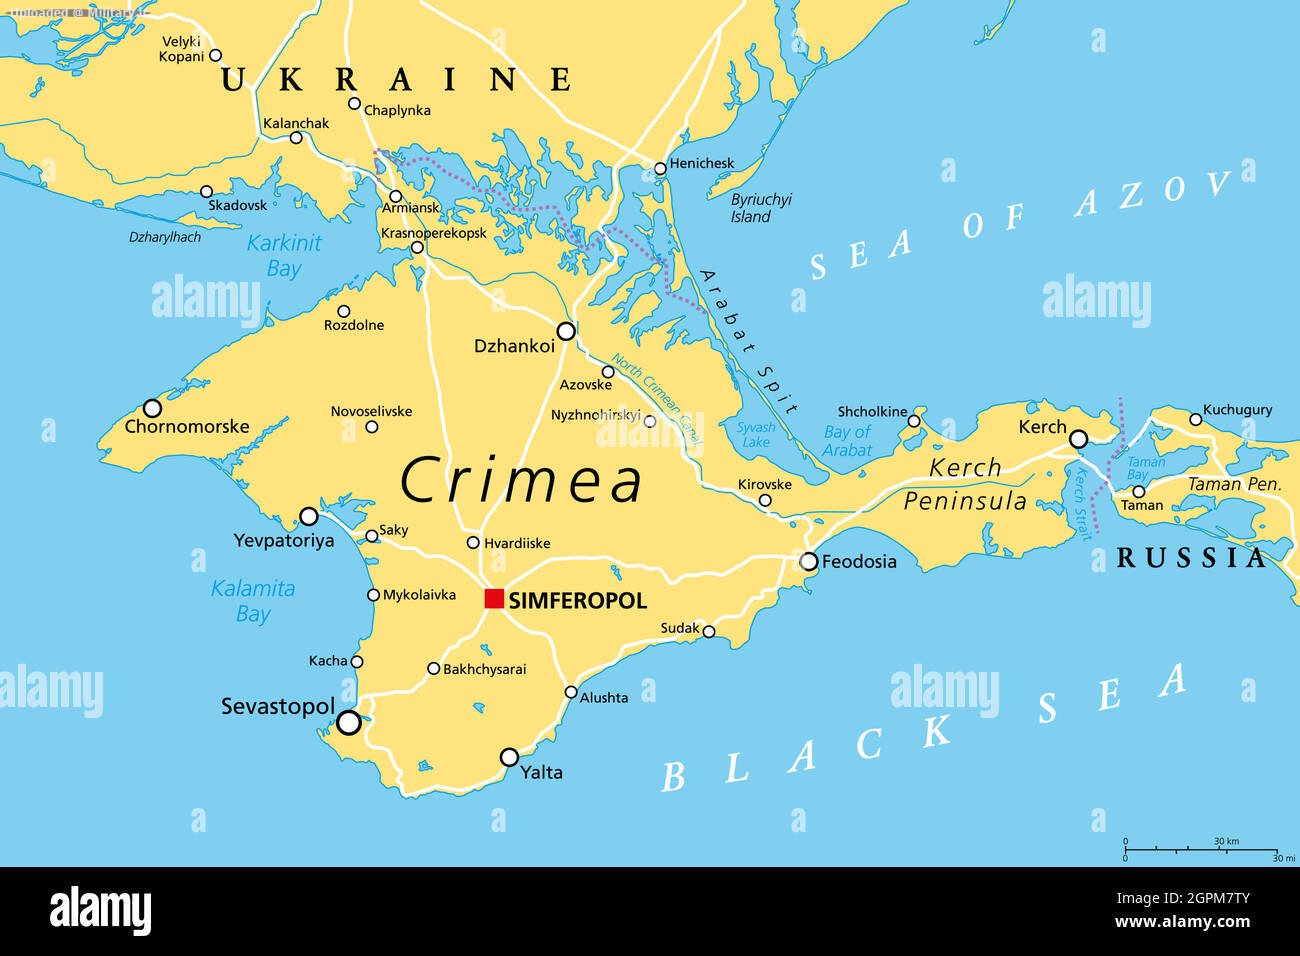 crimea-peninsula-in-eastern-europe-polit